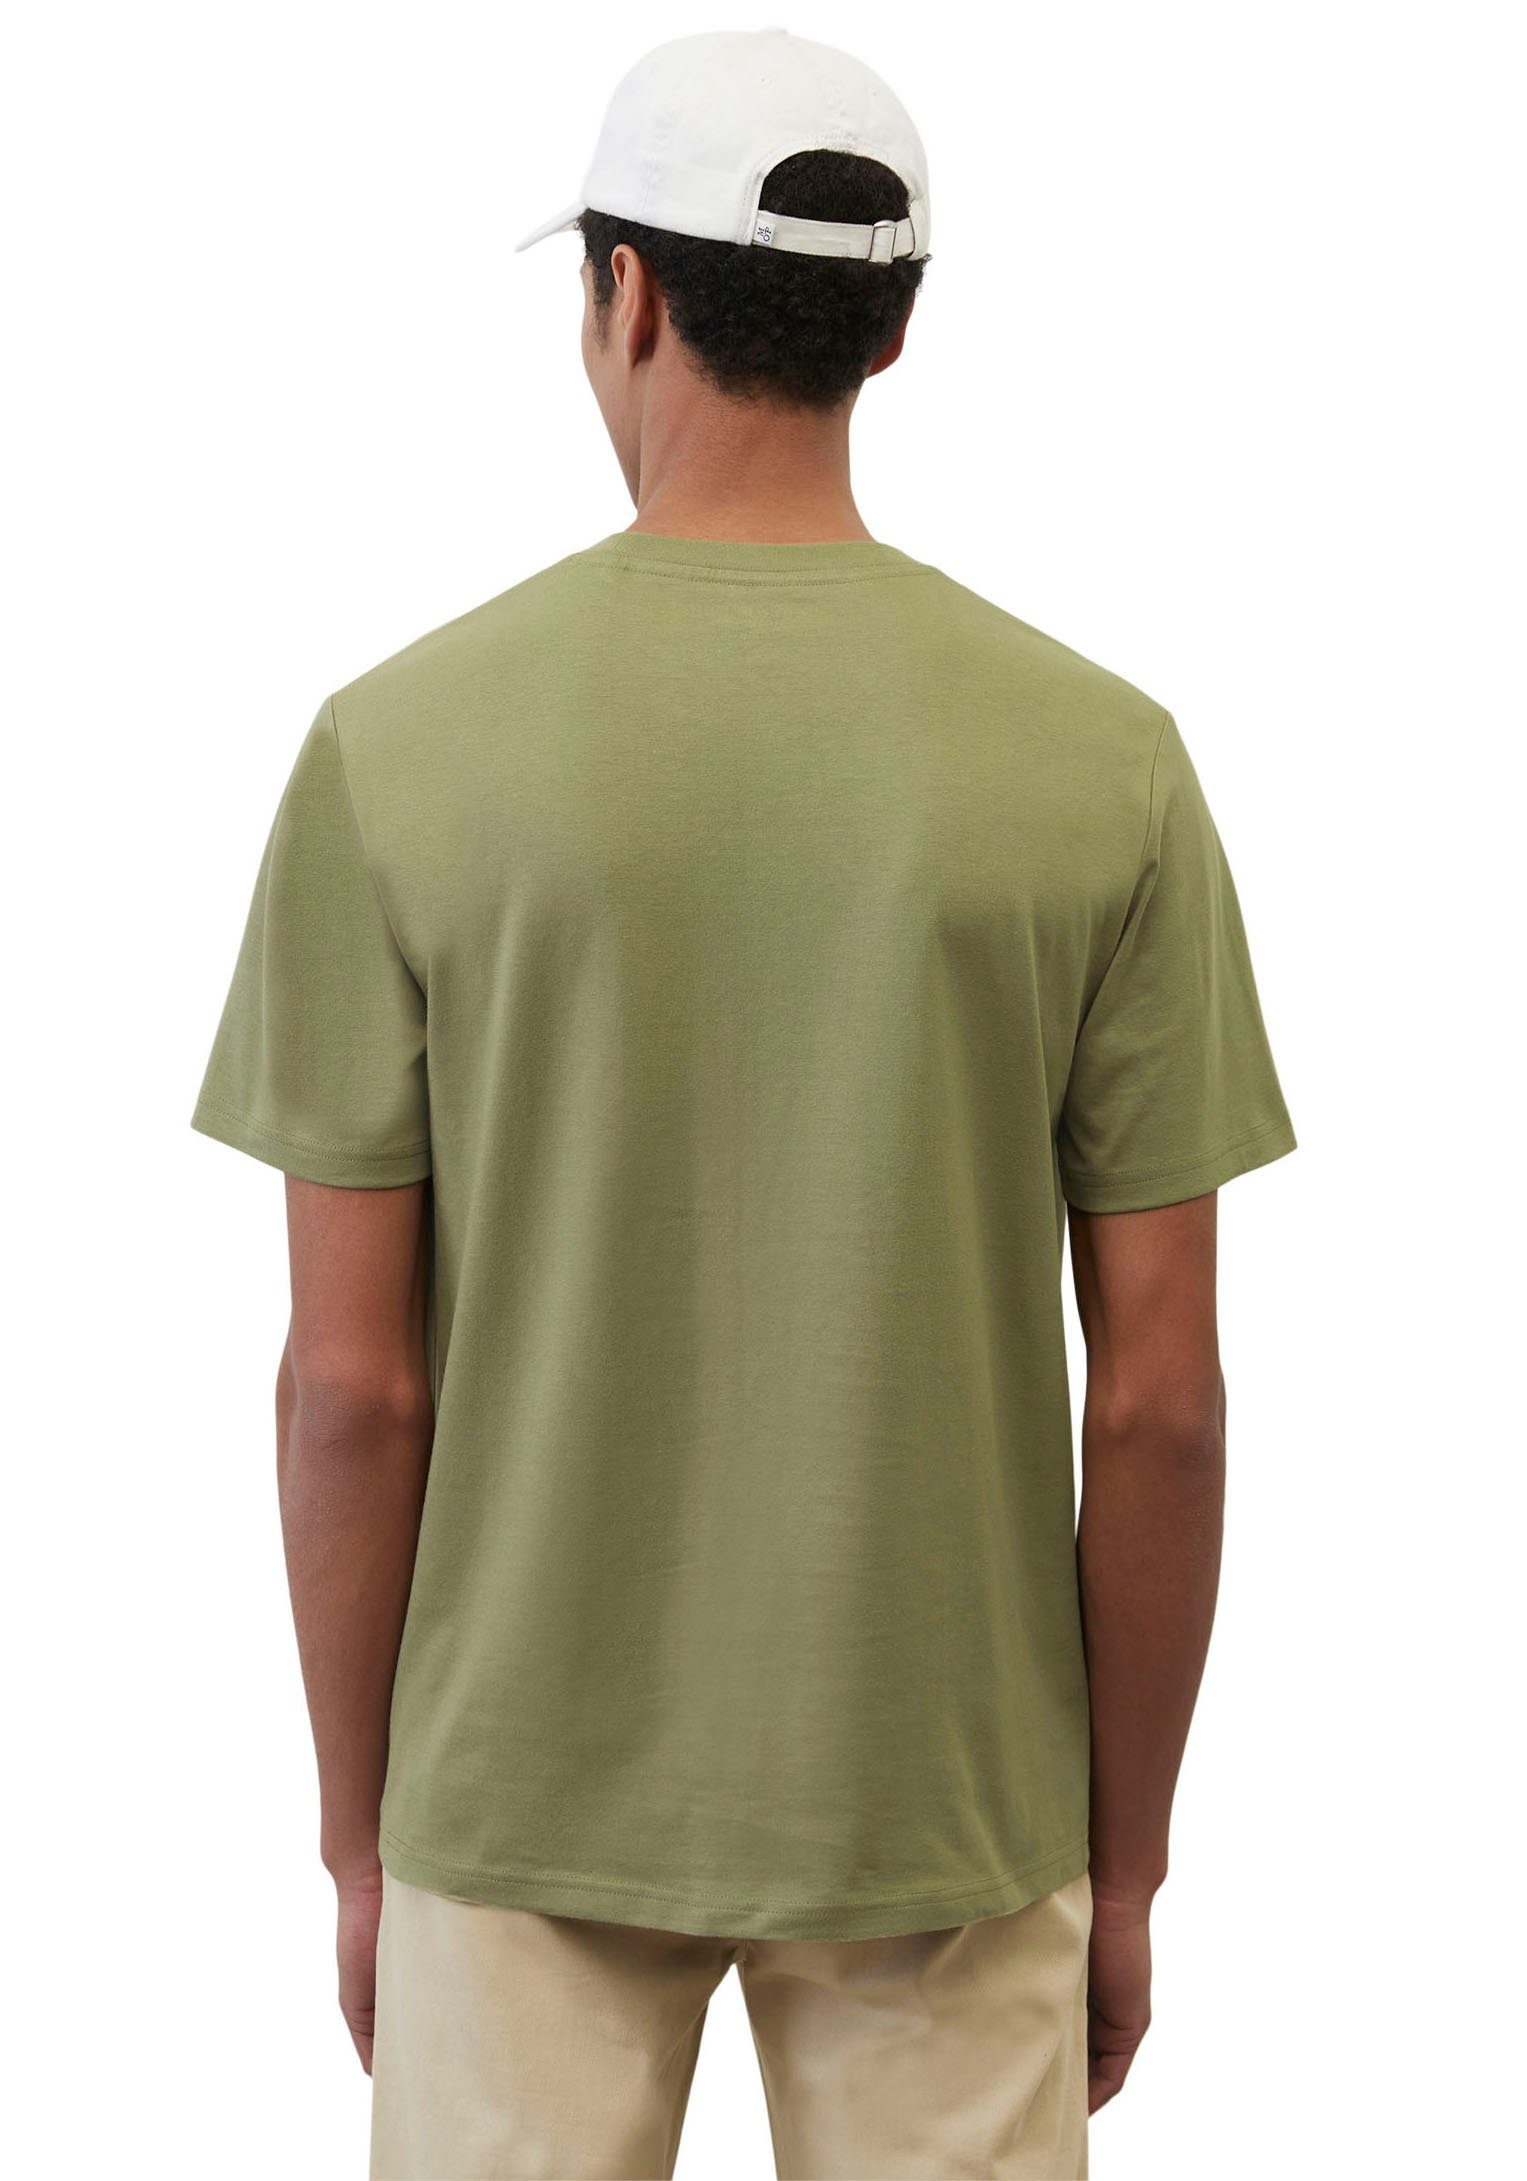 Marc T-shirt, oliv ribbed sleeve, collar short logo O'Polo T-Shirt print,